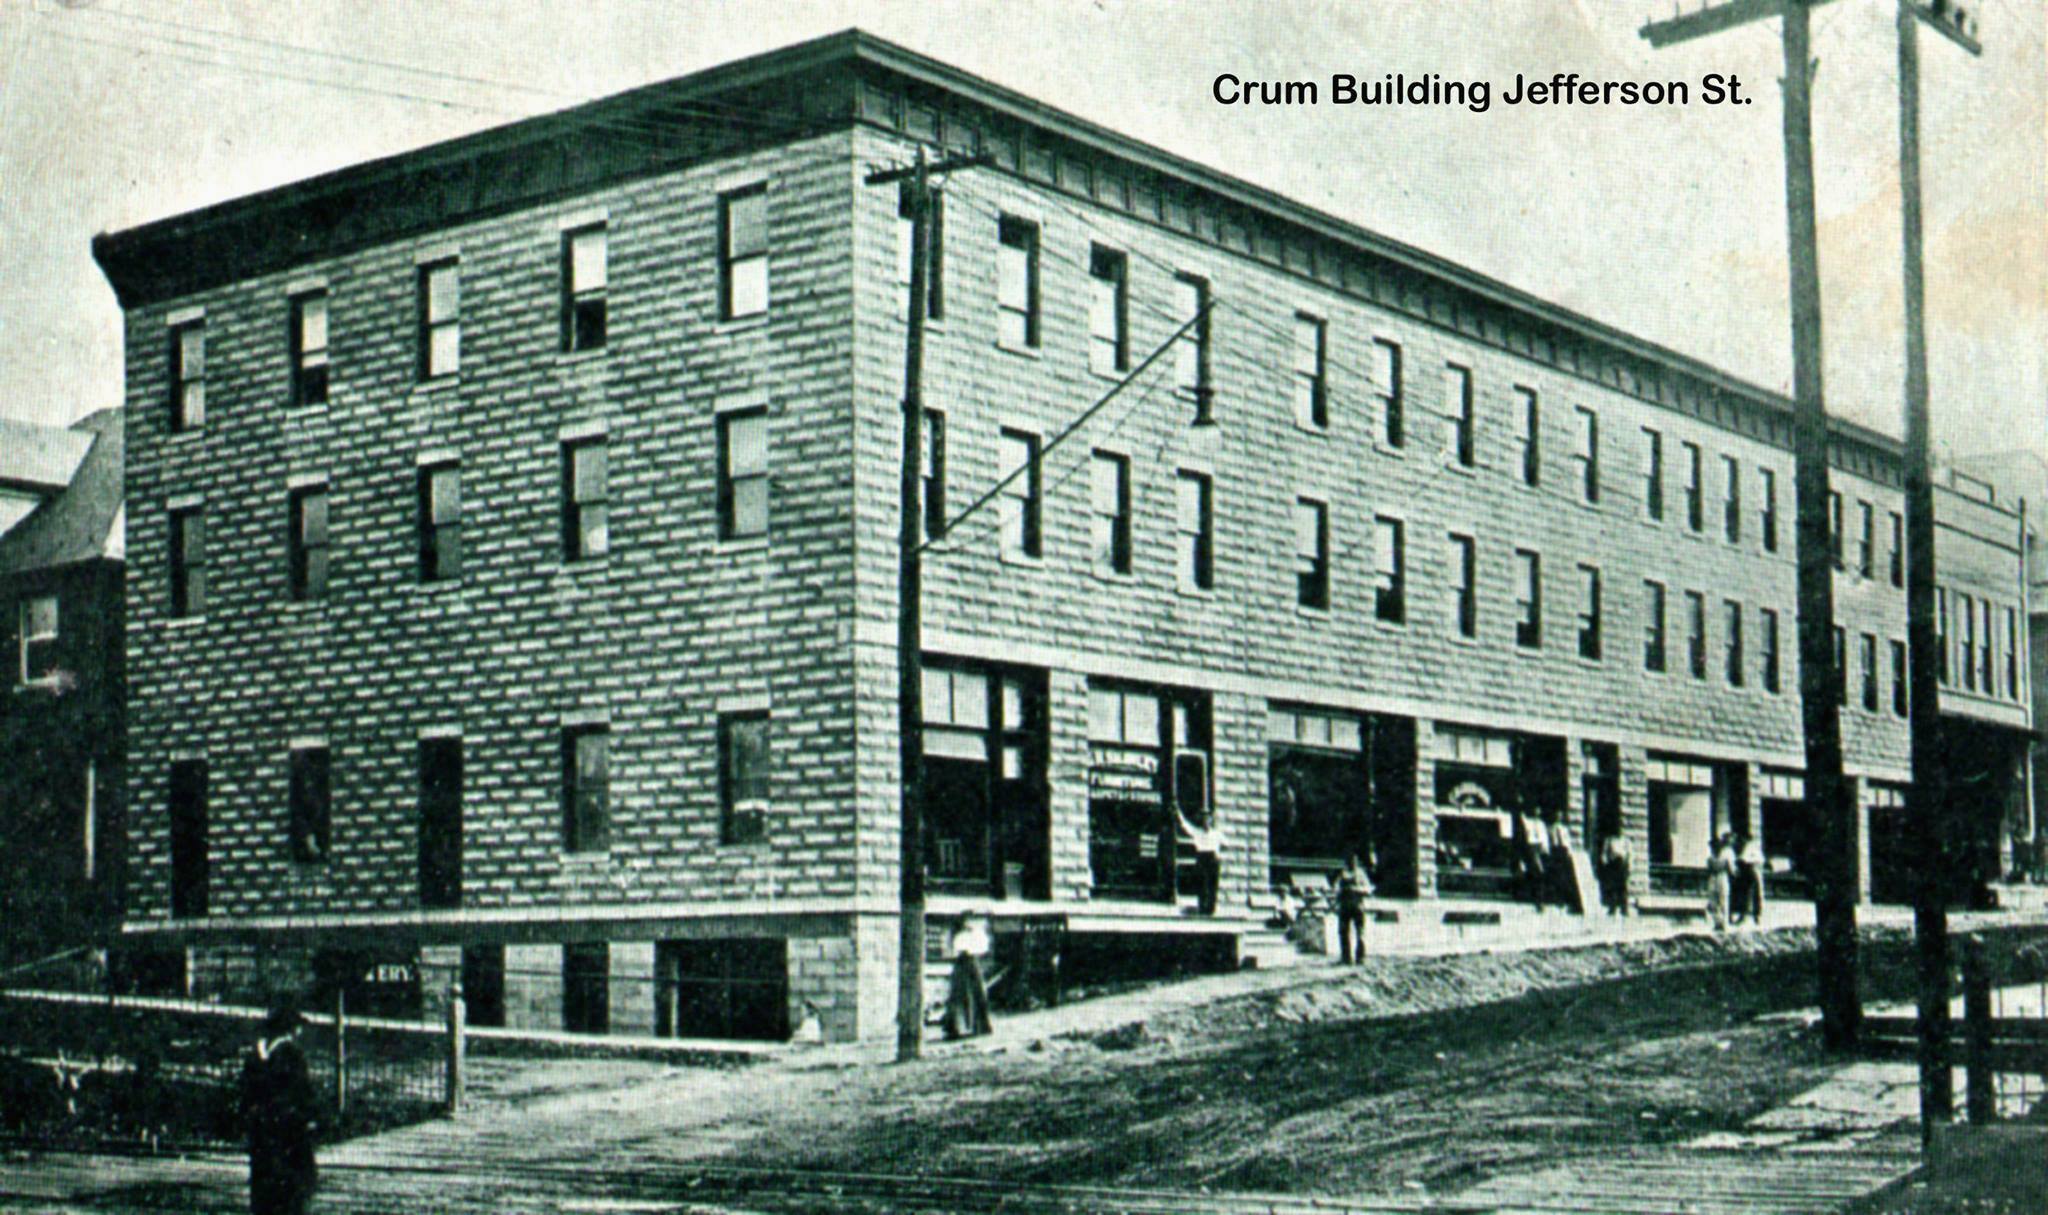 Crum Building on Jefferson Street